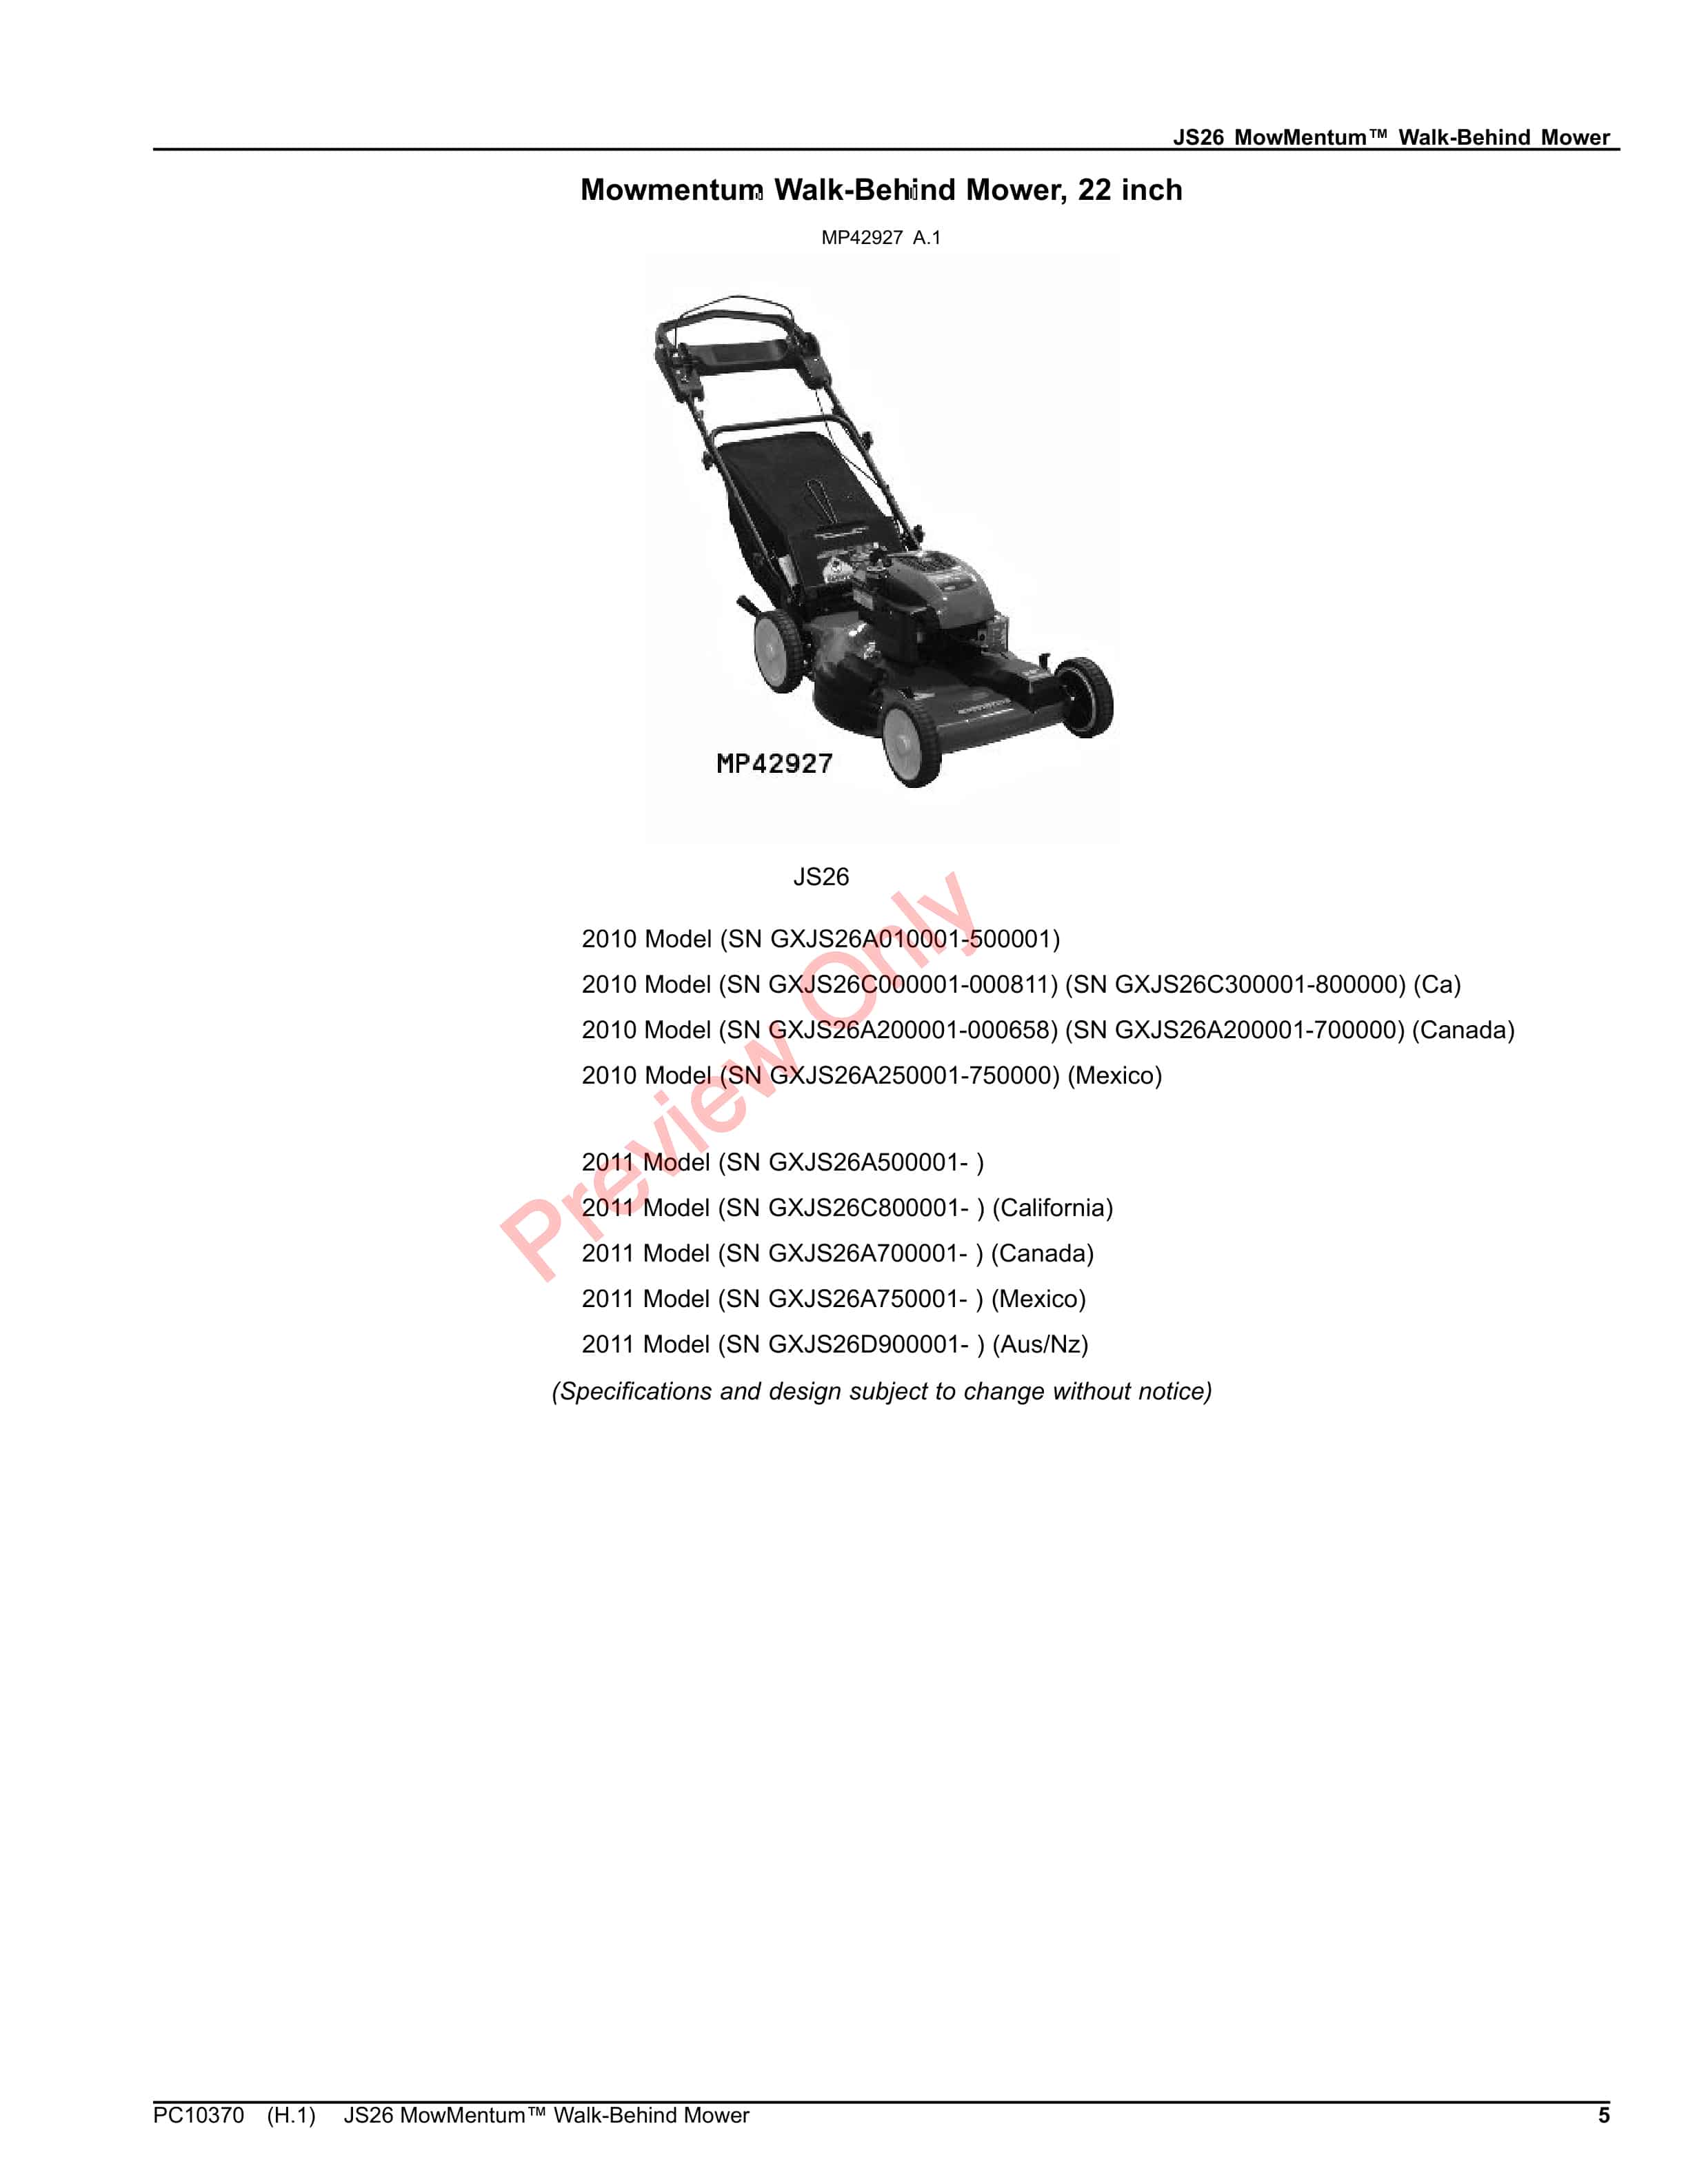 John Deere JS26 MowMentum Walk Behind Mower Parts Catalog PC10370 04NOV22 5